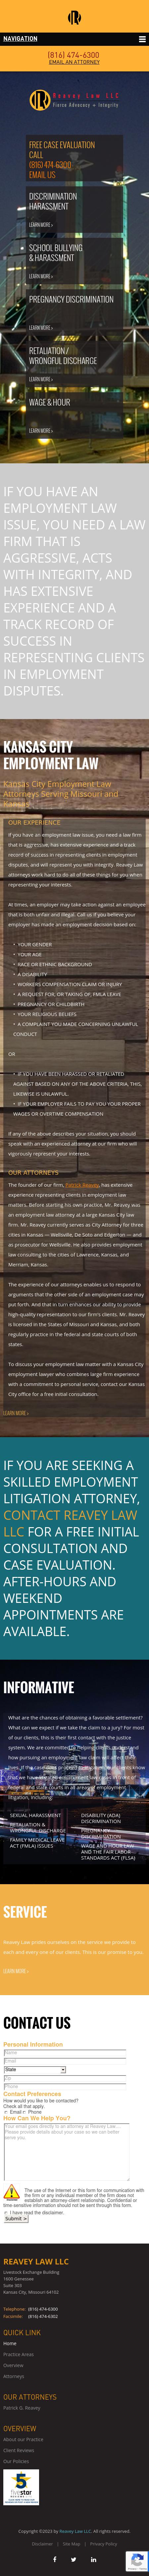 Reavey Law - Kansas City MO Lawyers